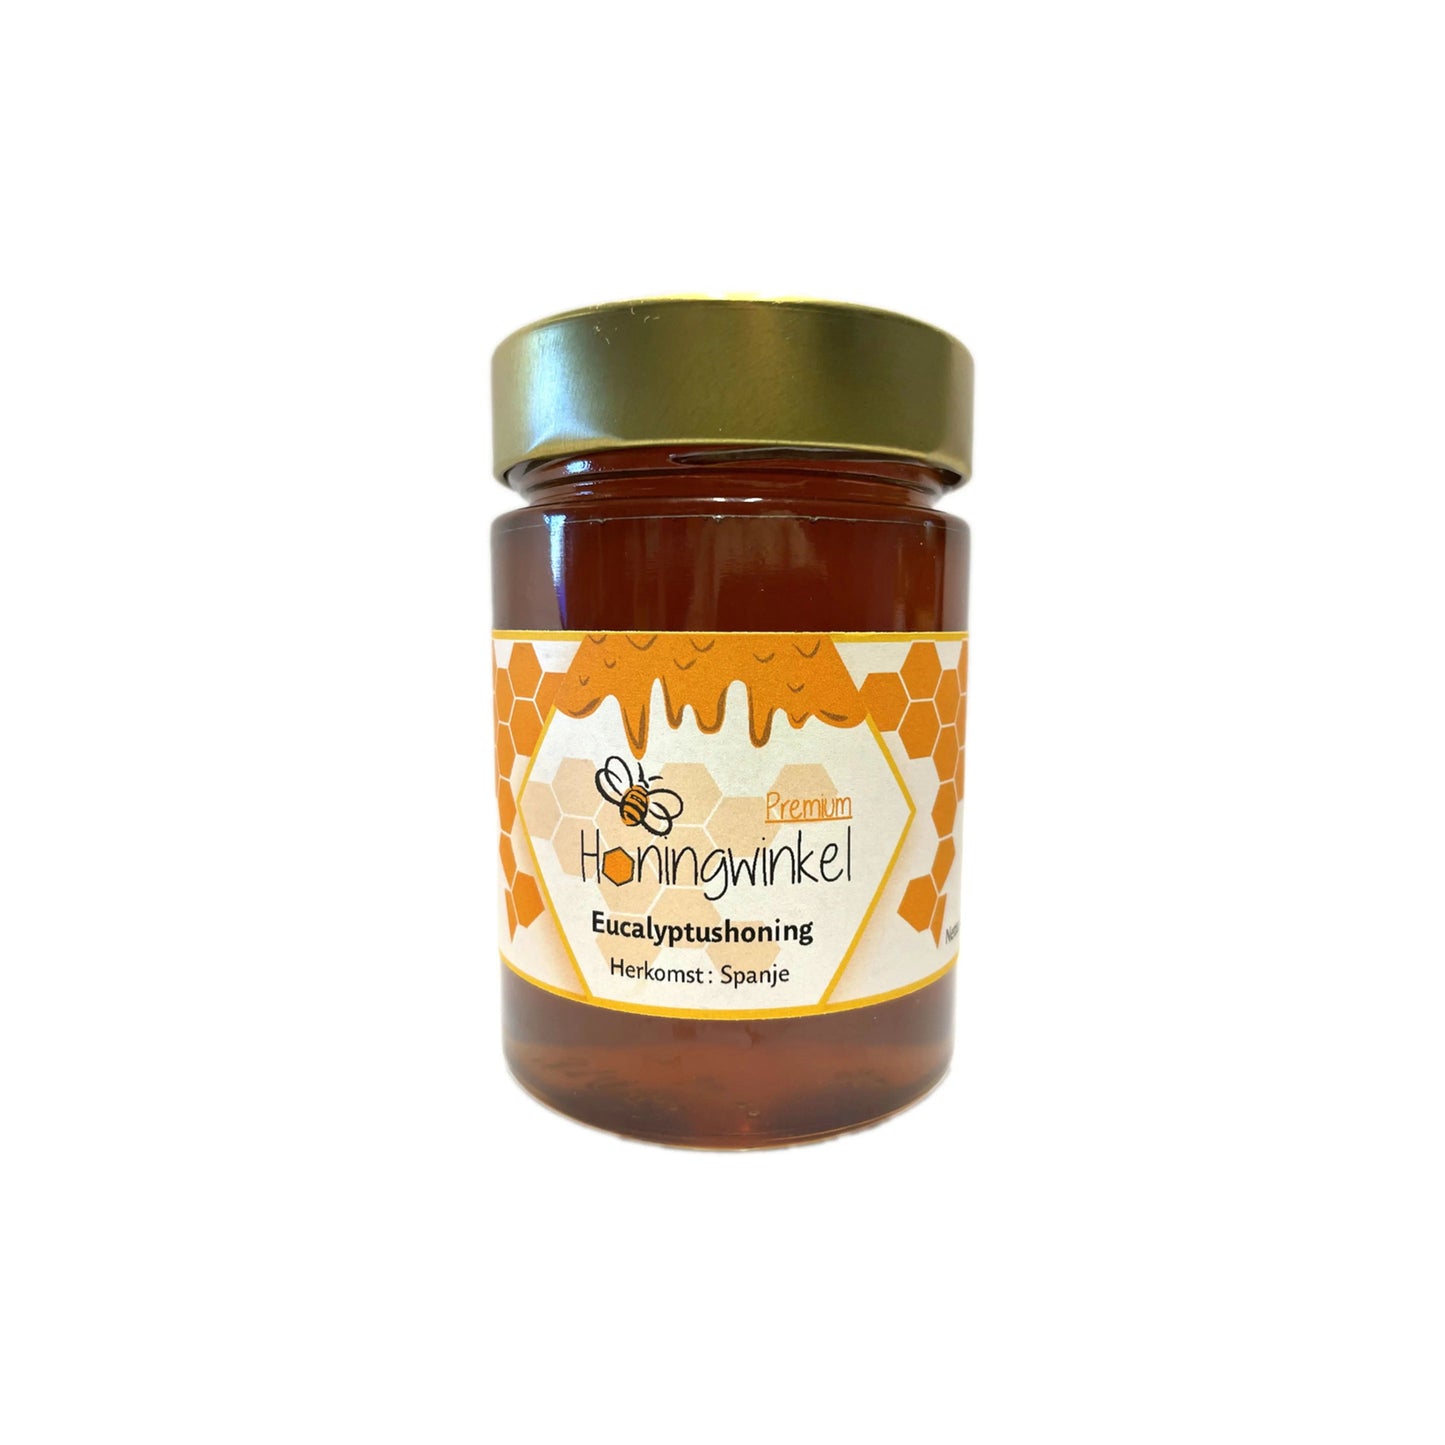 Premium eucalyptushoning Spanje 450g Honingwinkel (vloeibaar)